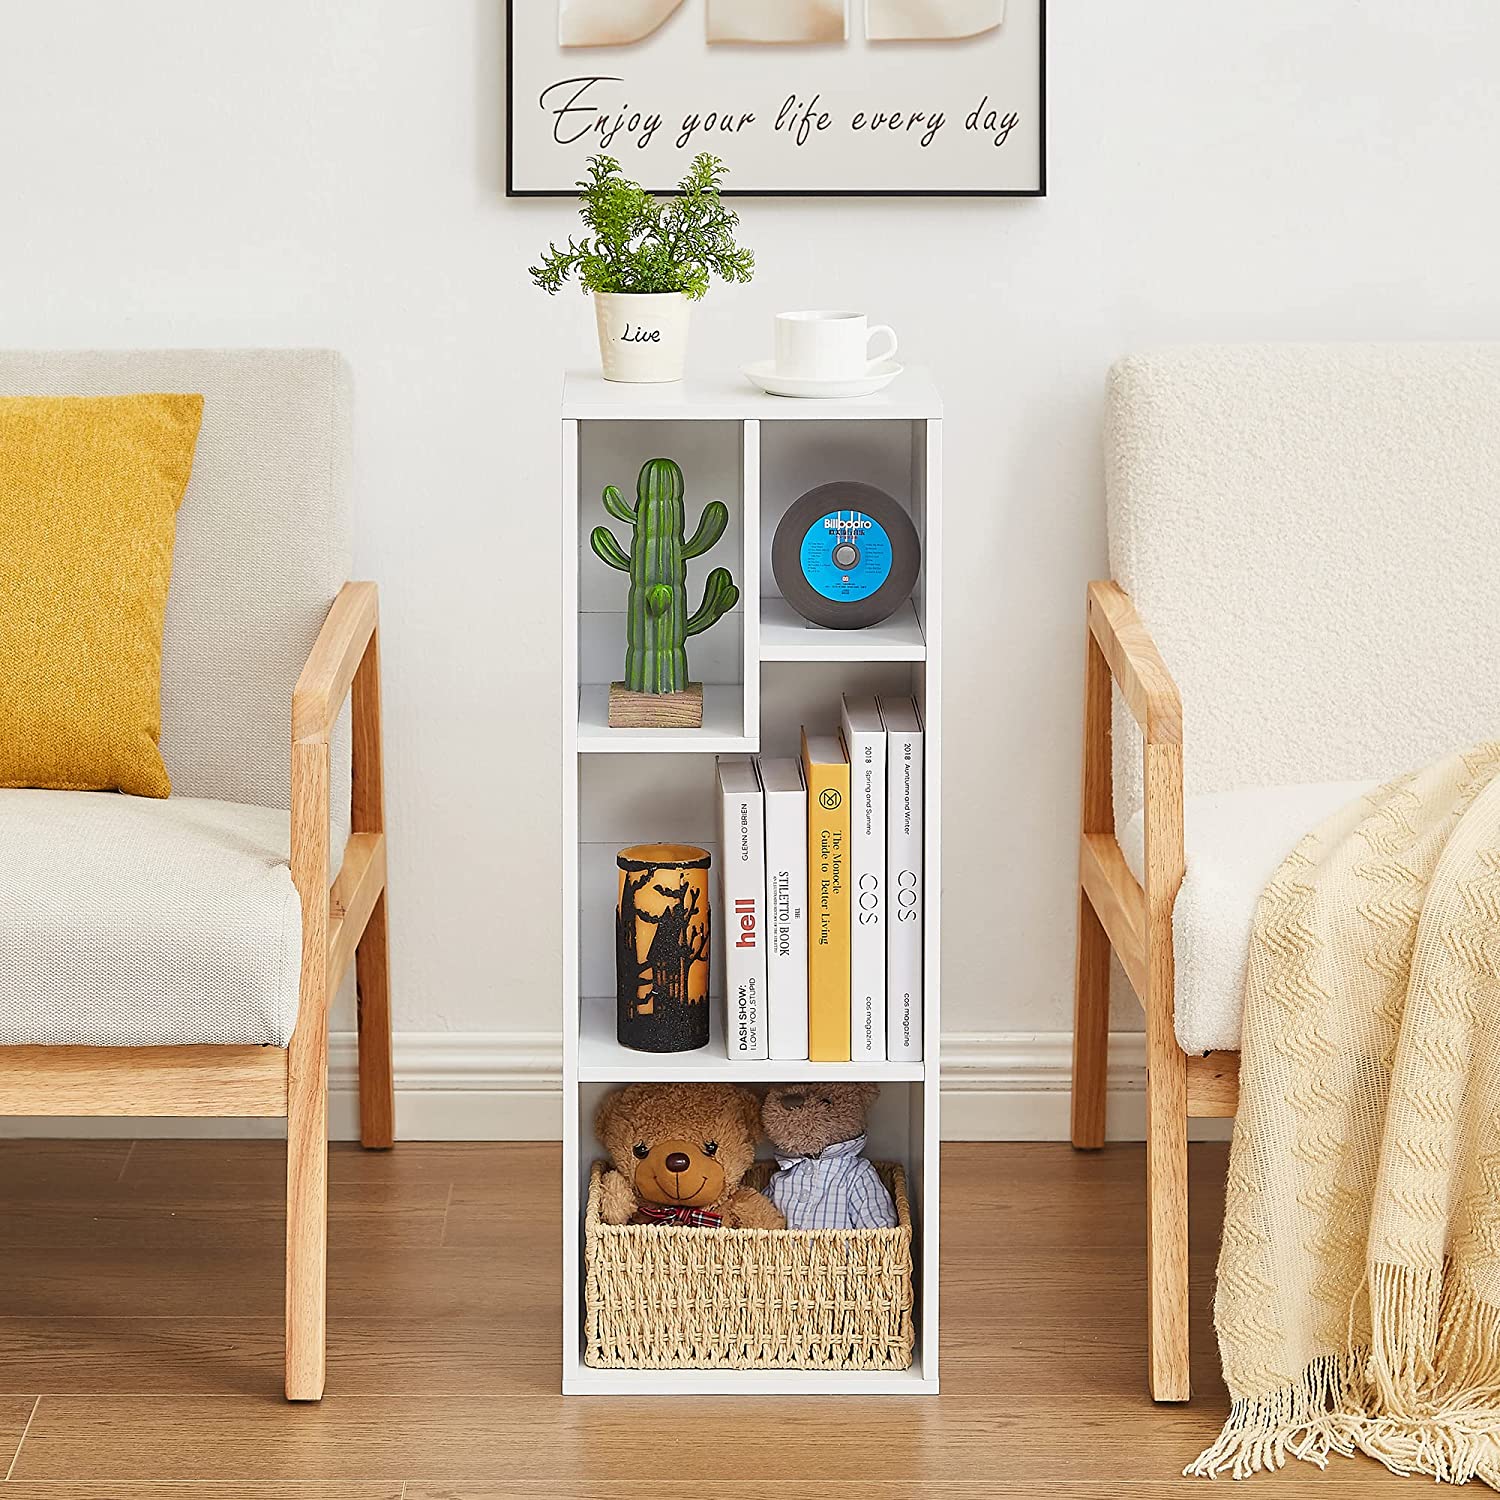 VECELO 3-Tier Bookcase,Small Storage Shelves,Industrial Shelving